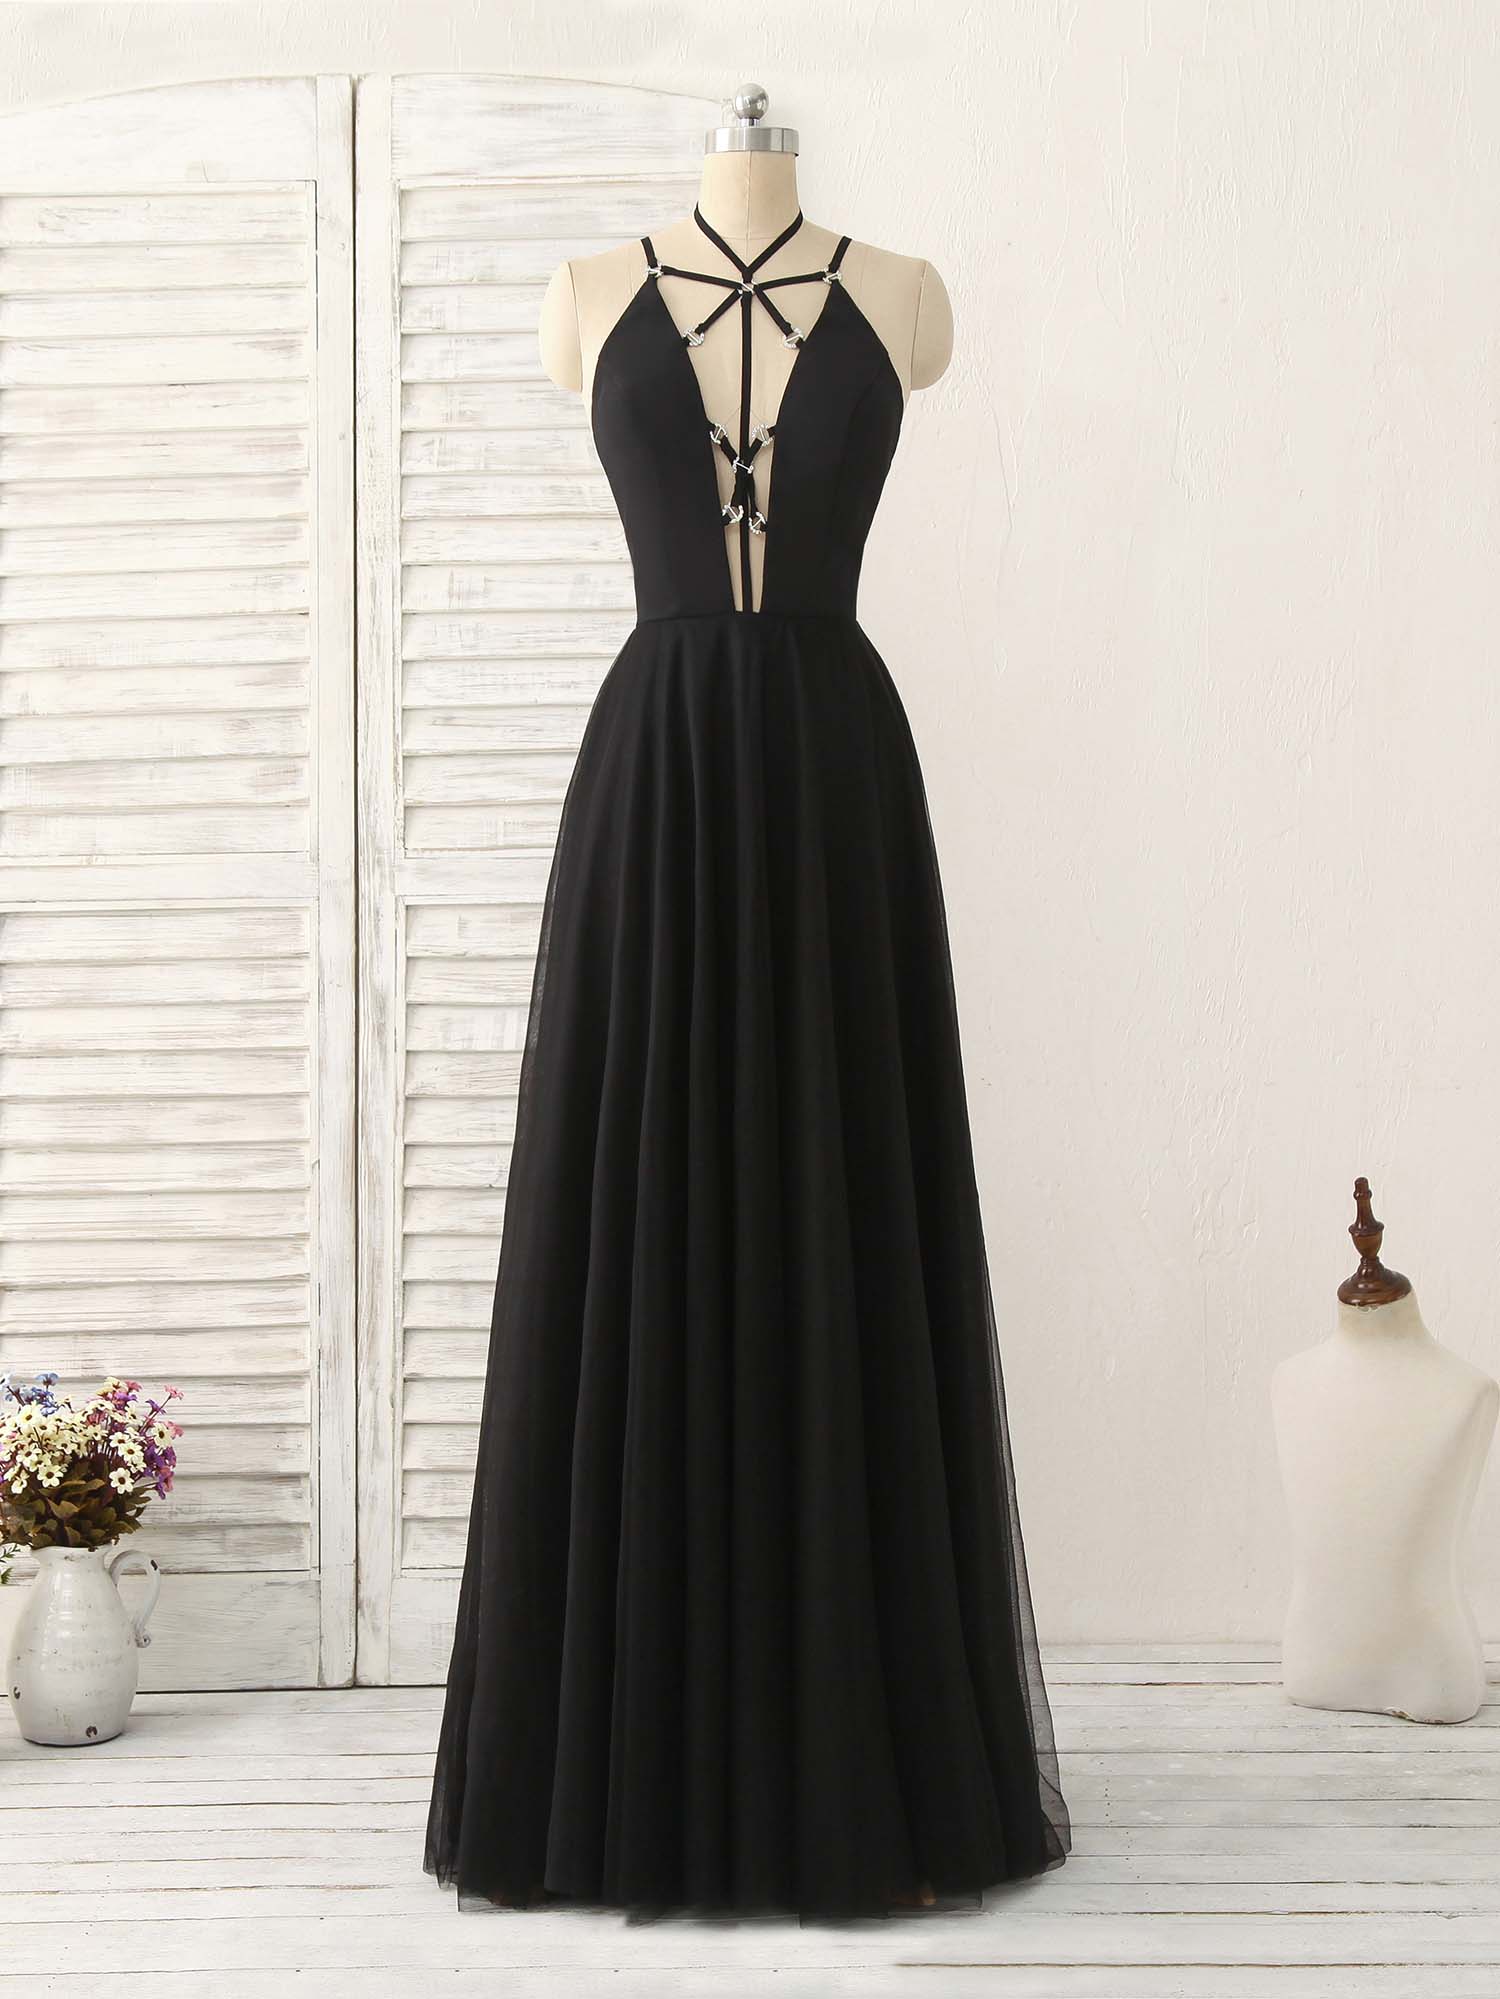 Black Tulle Backless Long Corset Prom Dress, Black Evening Dress outfit, Long Black Dress